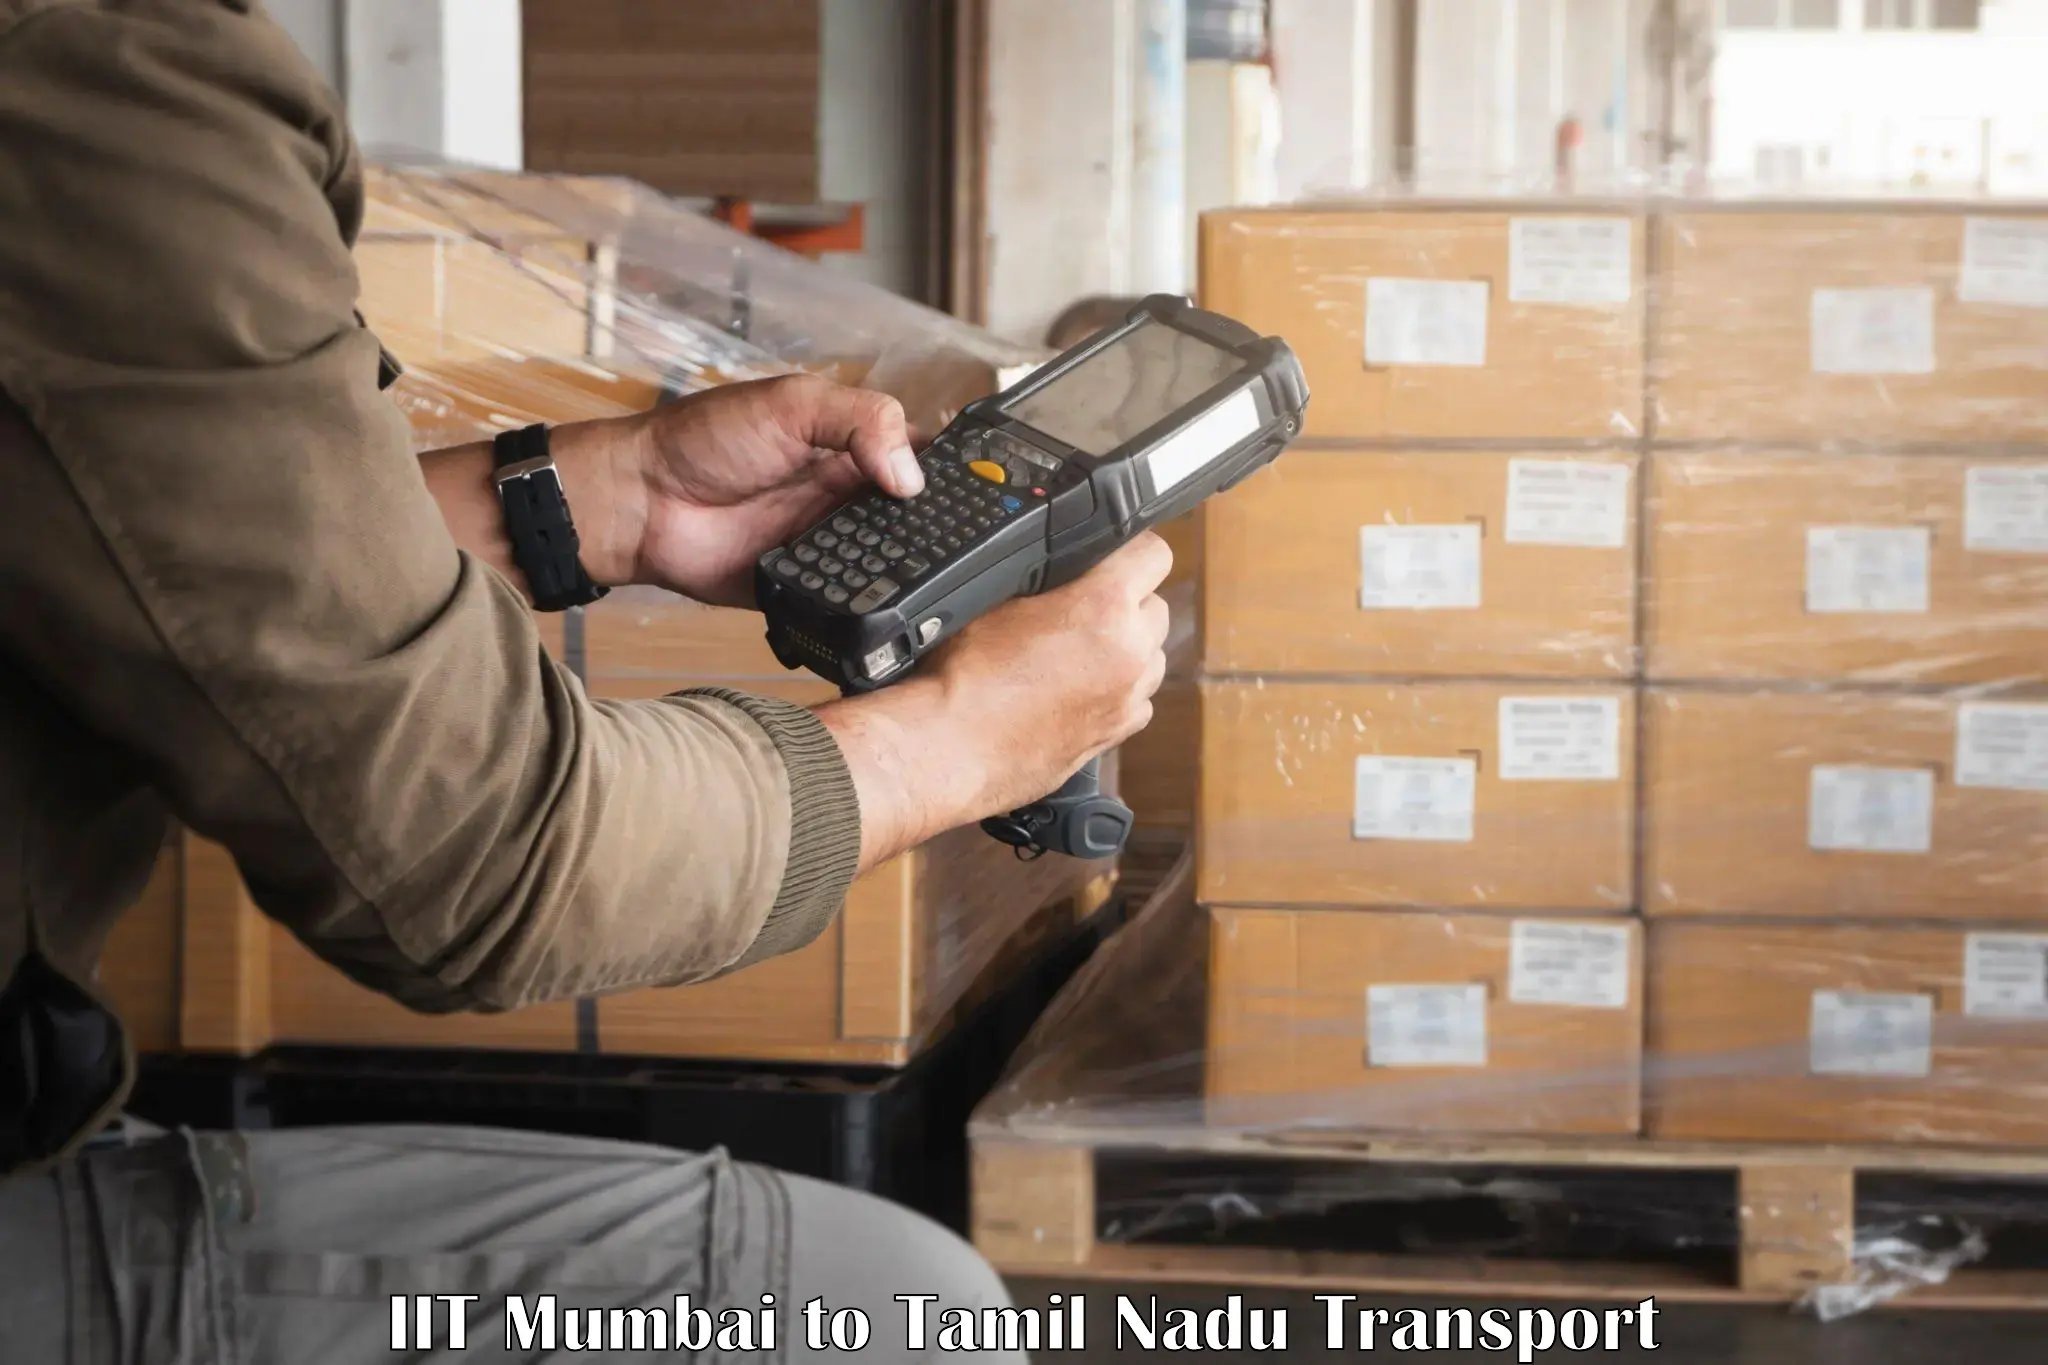 Cargo transportation services in IIT Mumbai to Tamil Nadu